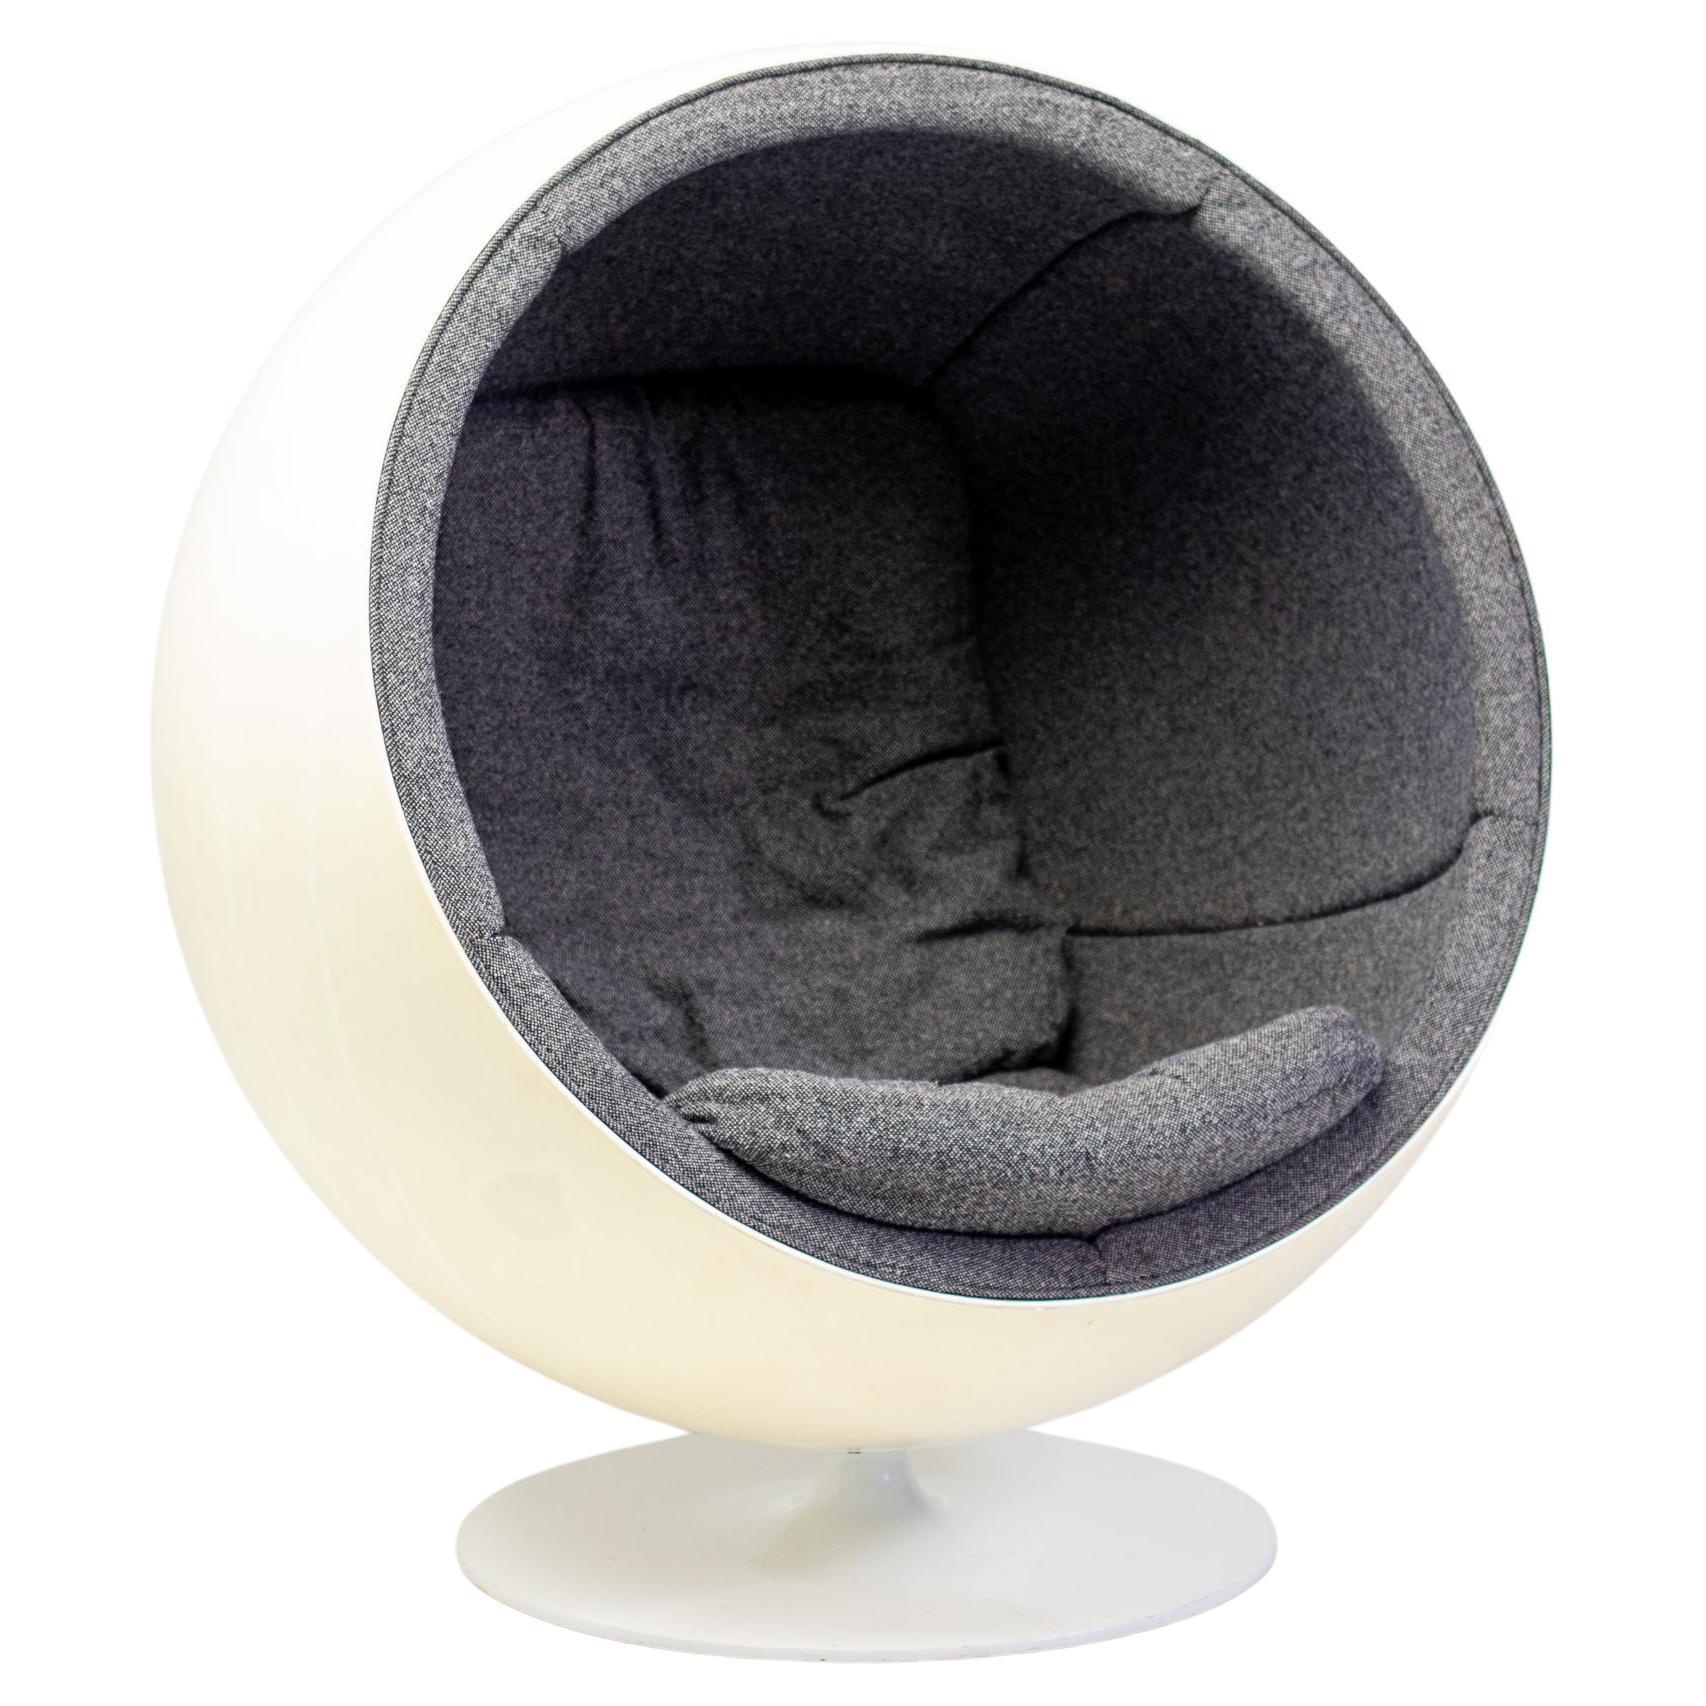 Iconic Eero Aarnio Ball Chair by Adelta